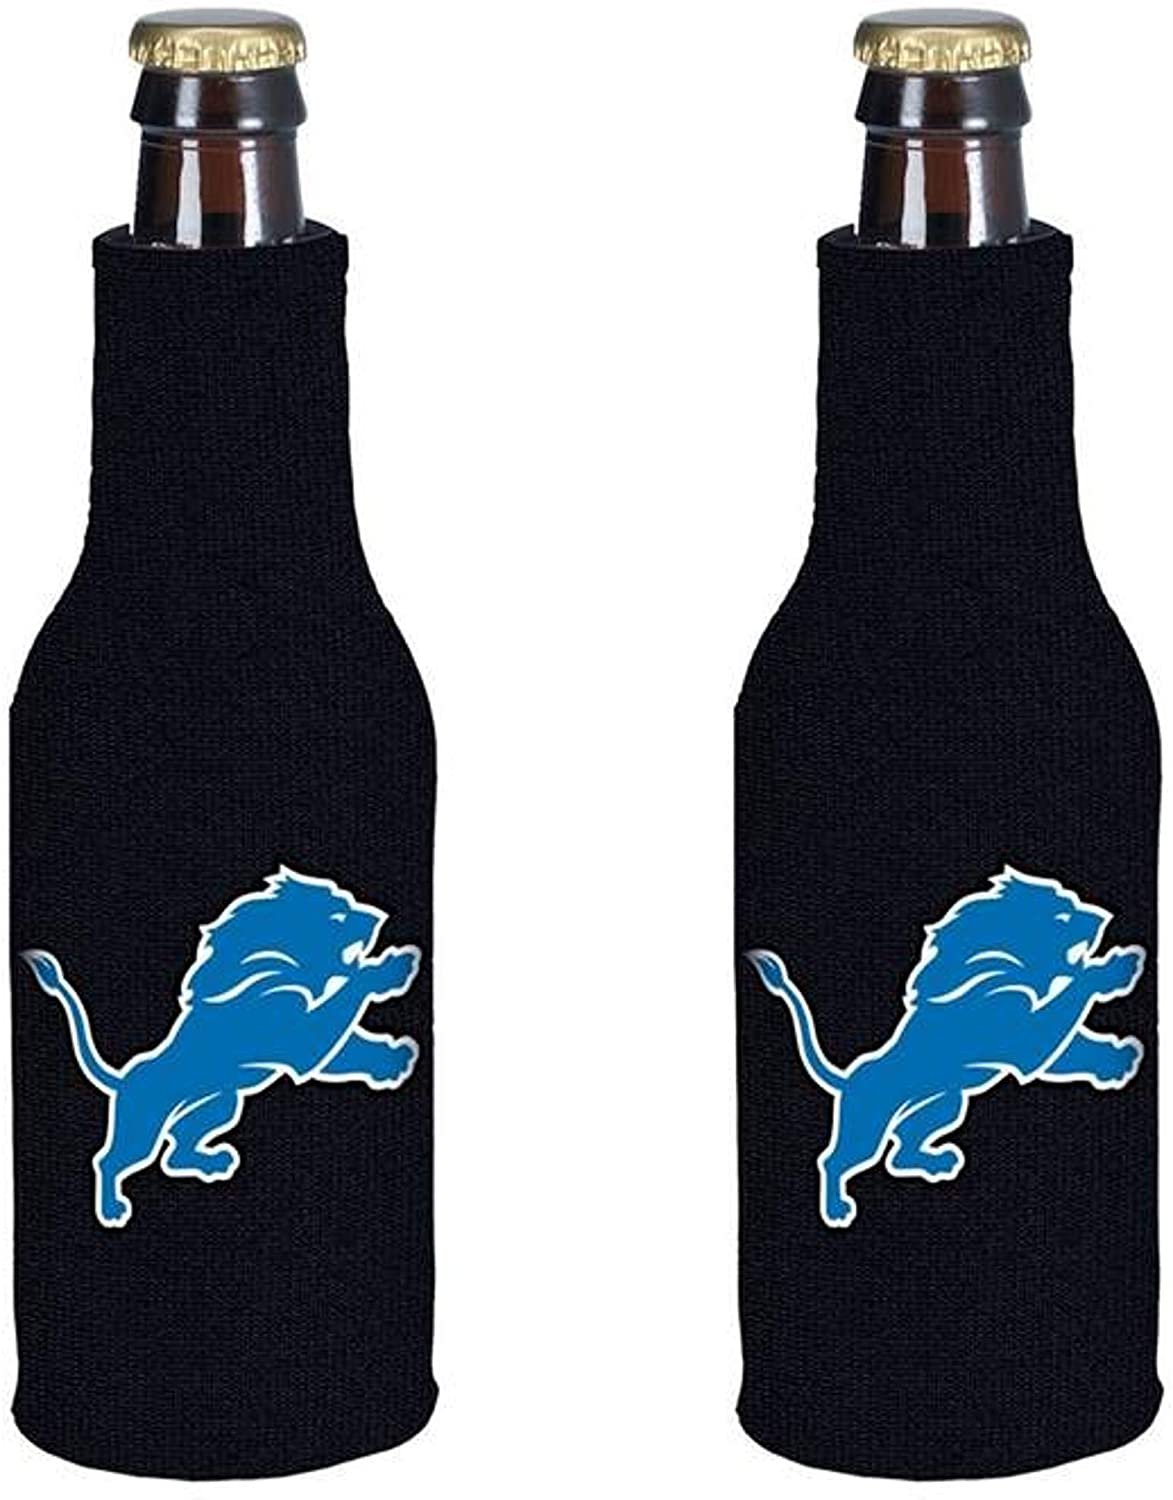 Detroit Lions Pair of 16oz Drink Zipper Bottle Cooler Insulated Neoprene Beverage Holder, Logo Design